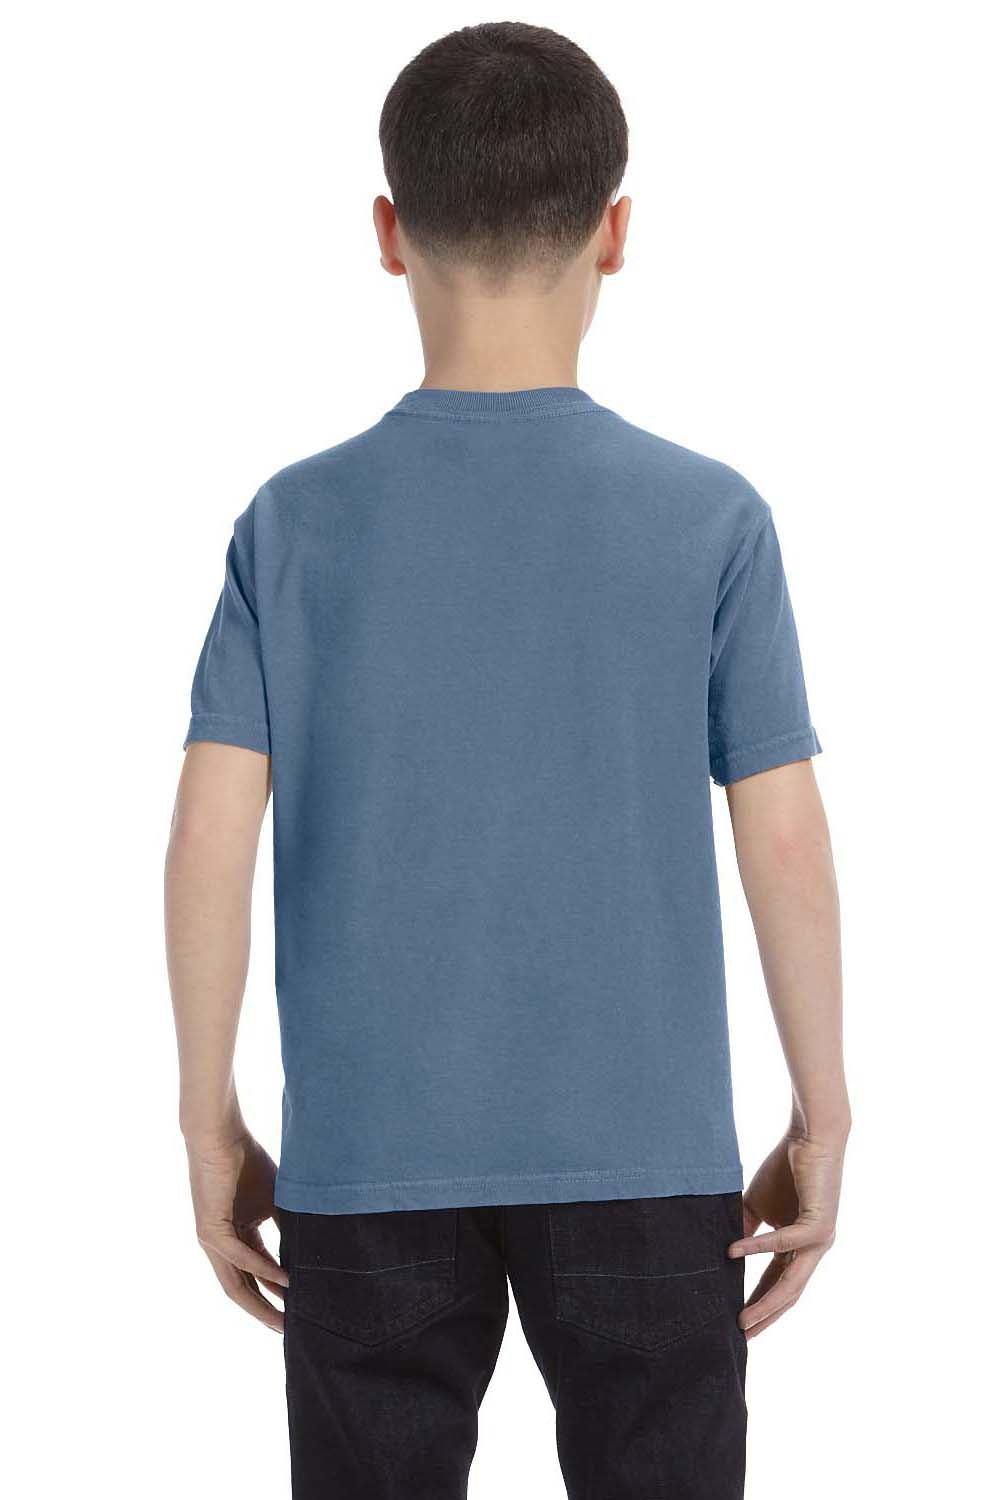 Comfort Colors C9018 Youth Short Sleeve Crewneck T-Shirt Blue Jean Back